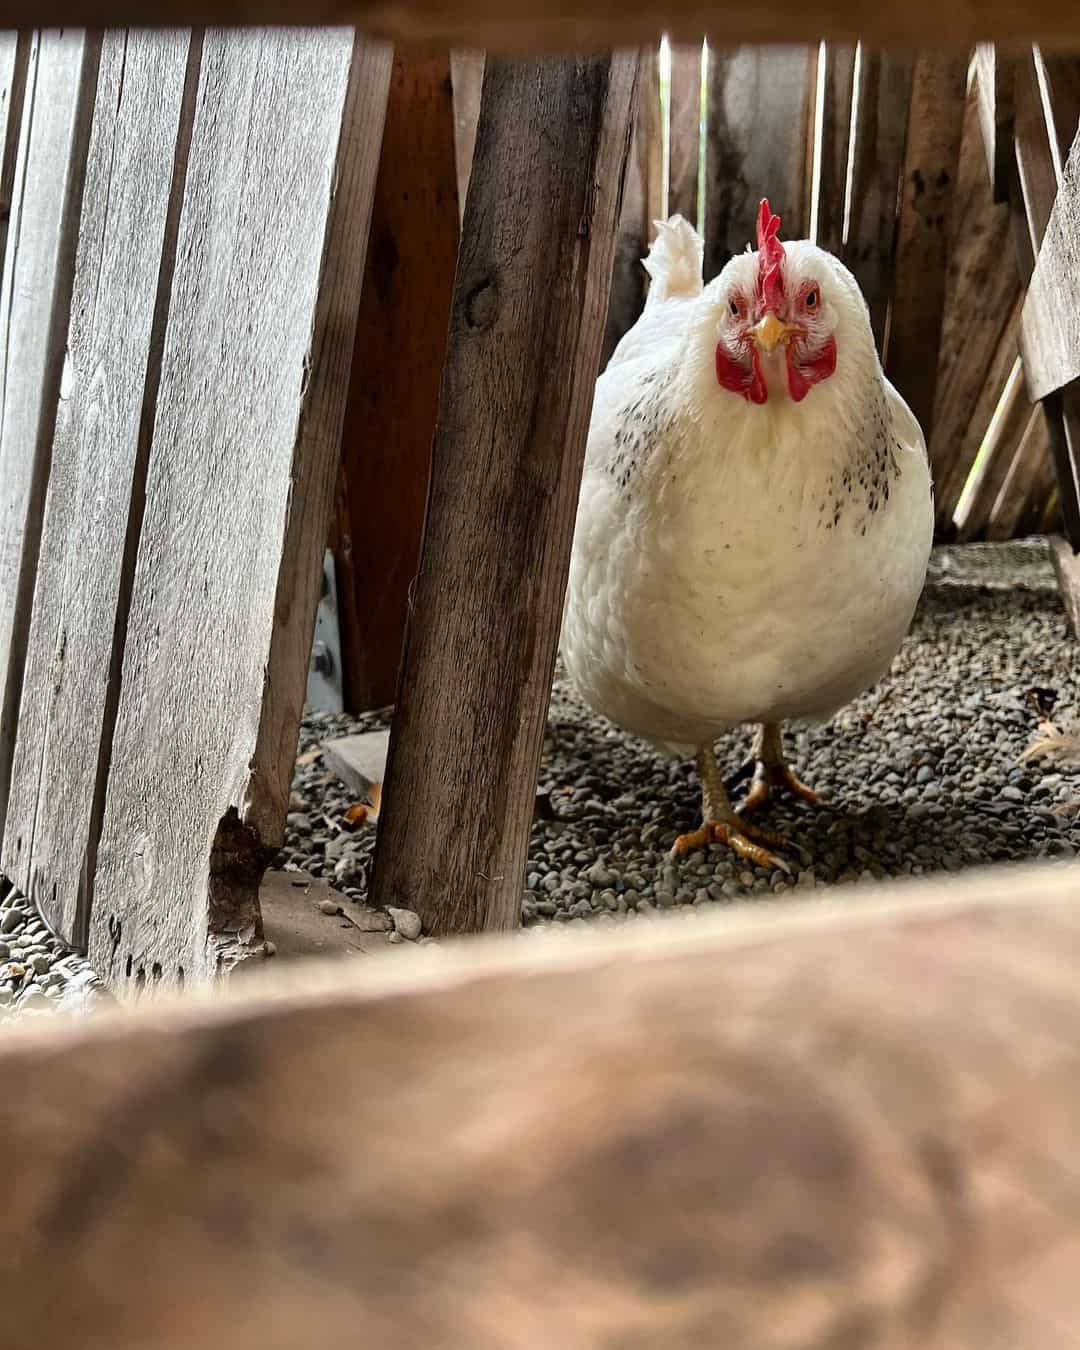 Do Delaware chickens make good pets?